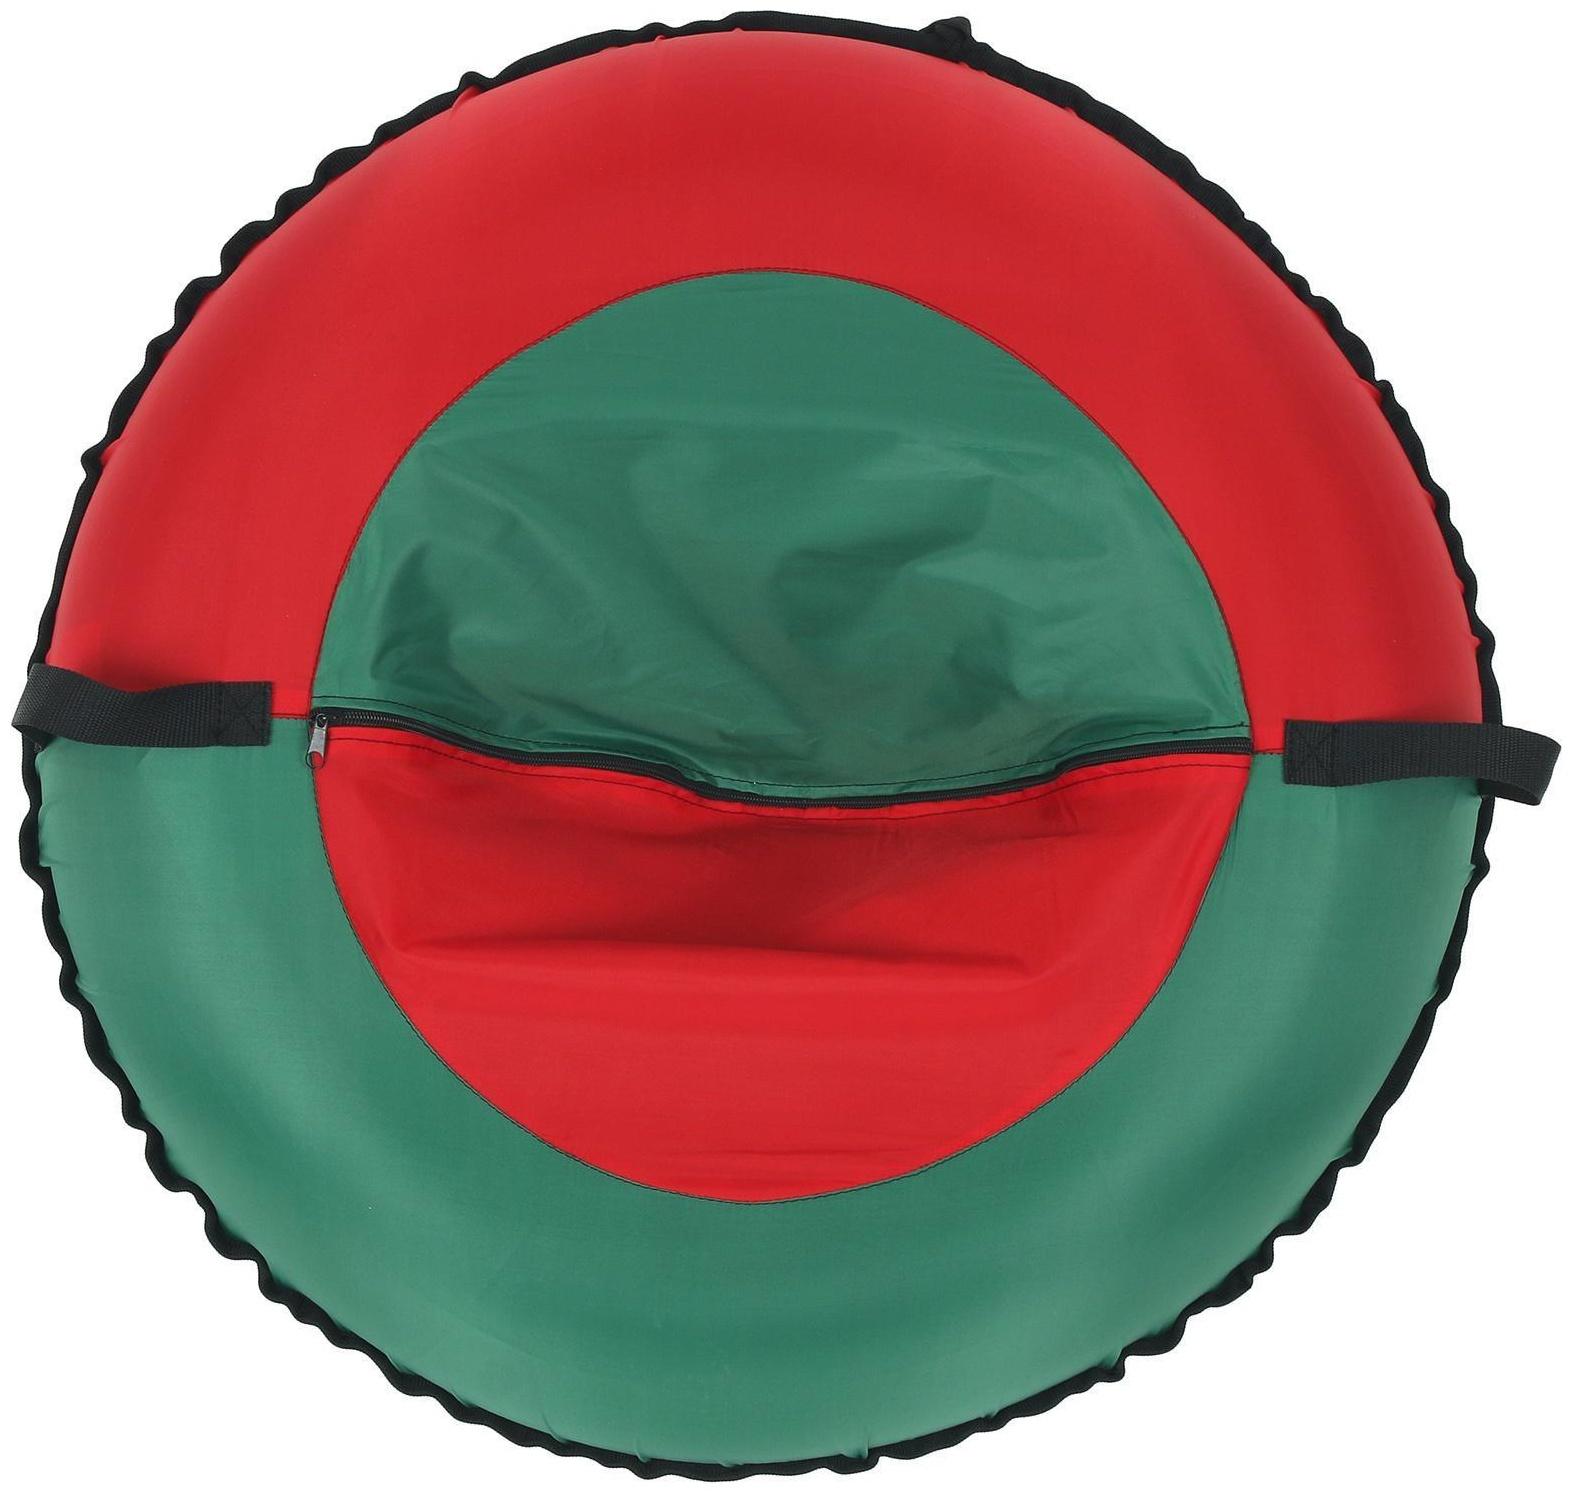 Тюбинг-ватрушка, диаметр чехла 80 см, тент/оксфорд, цвета микс